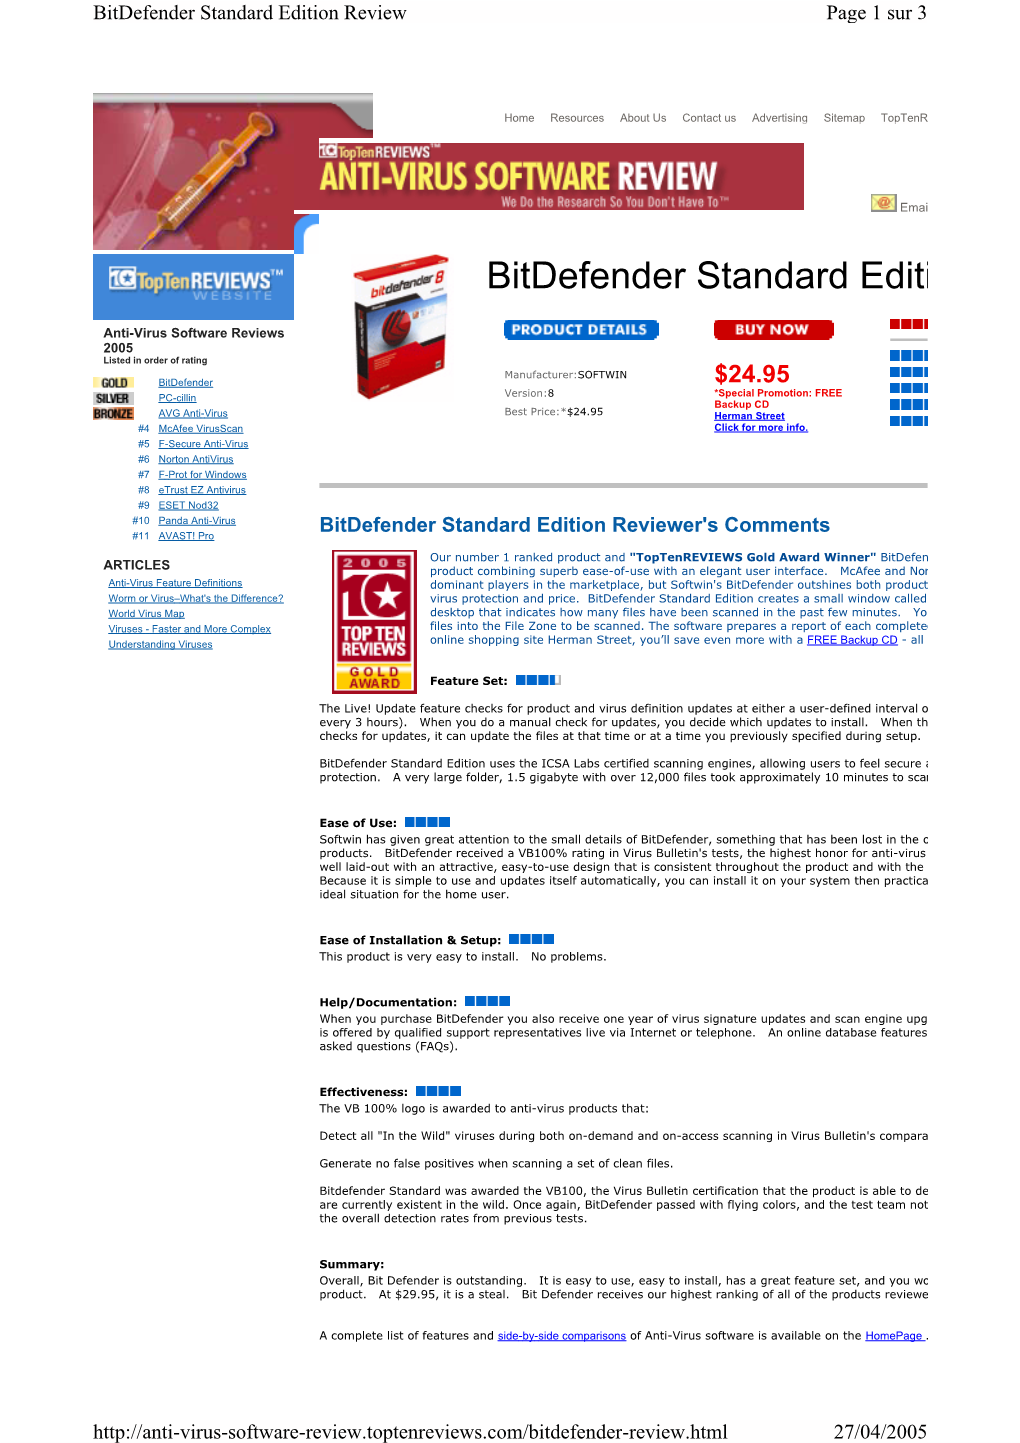 Bitdefender Standard Edition Review Page 1 Sur 3